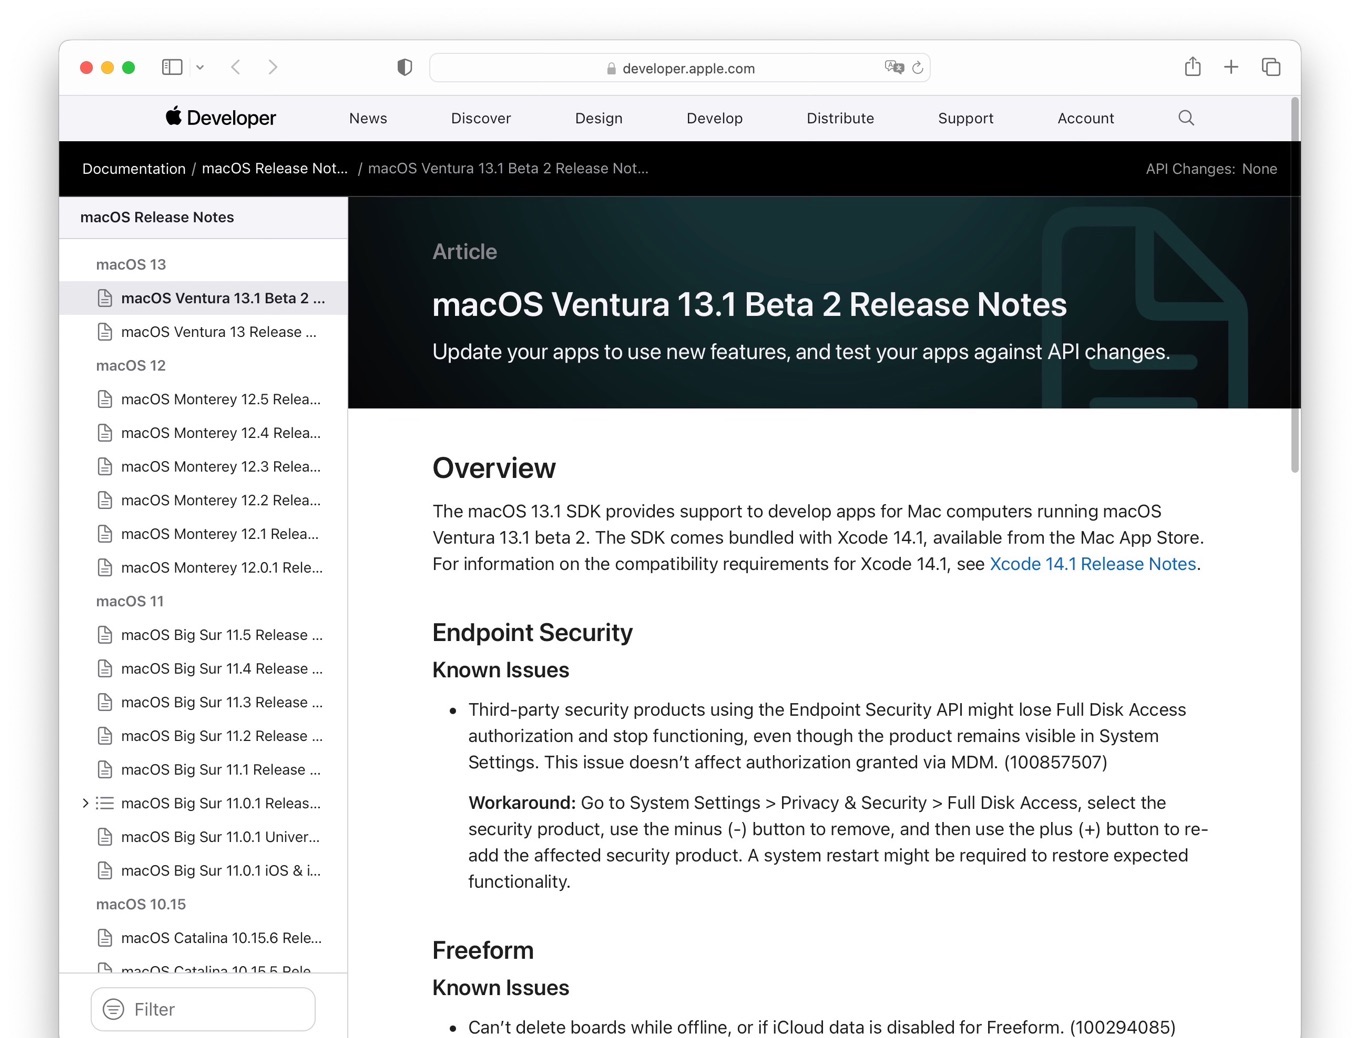 macOS Ventura 13.1 Beta 2 Release Notes